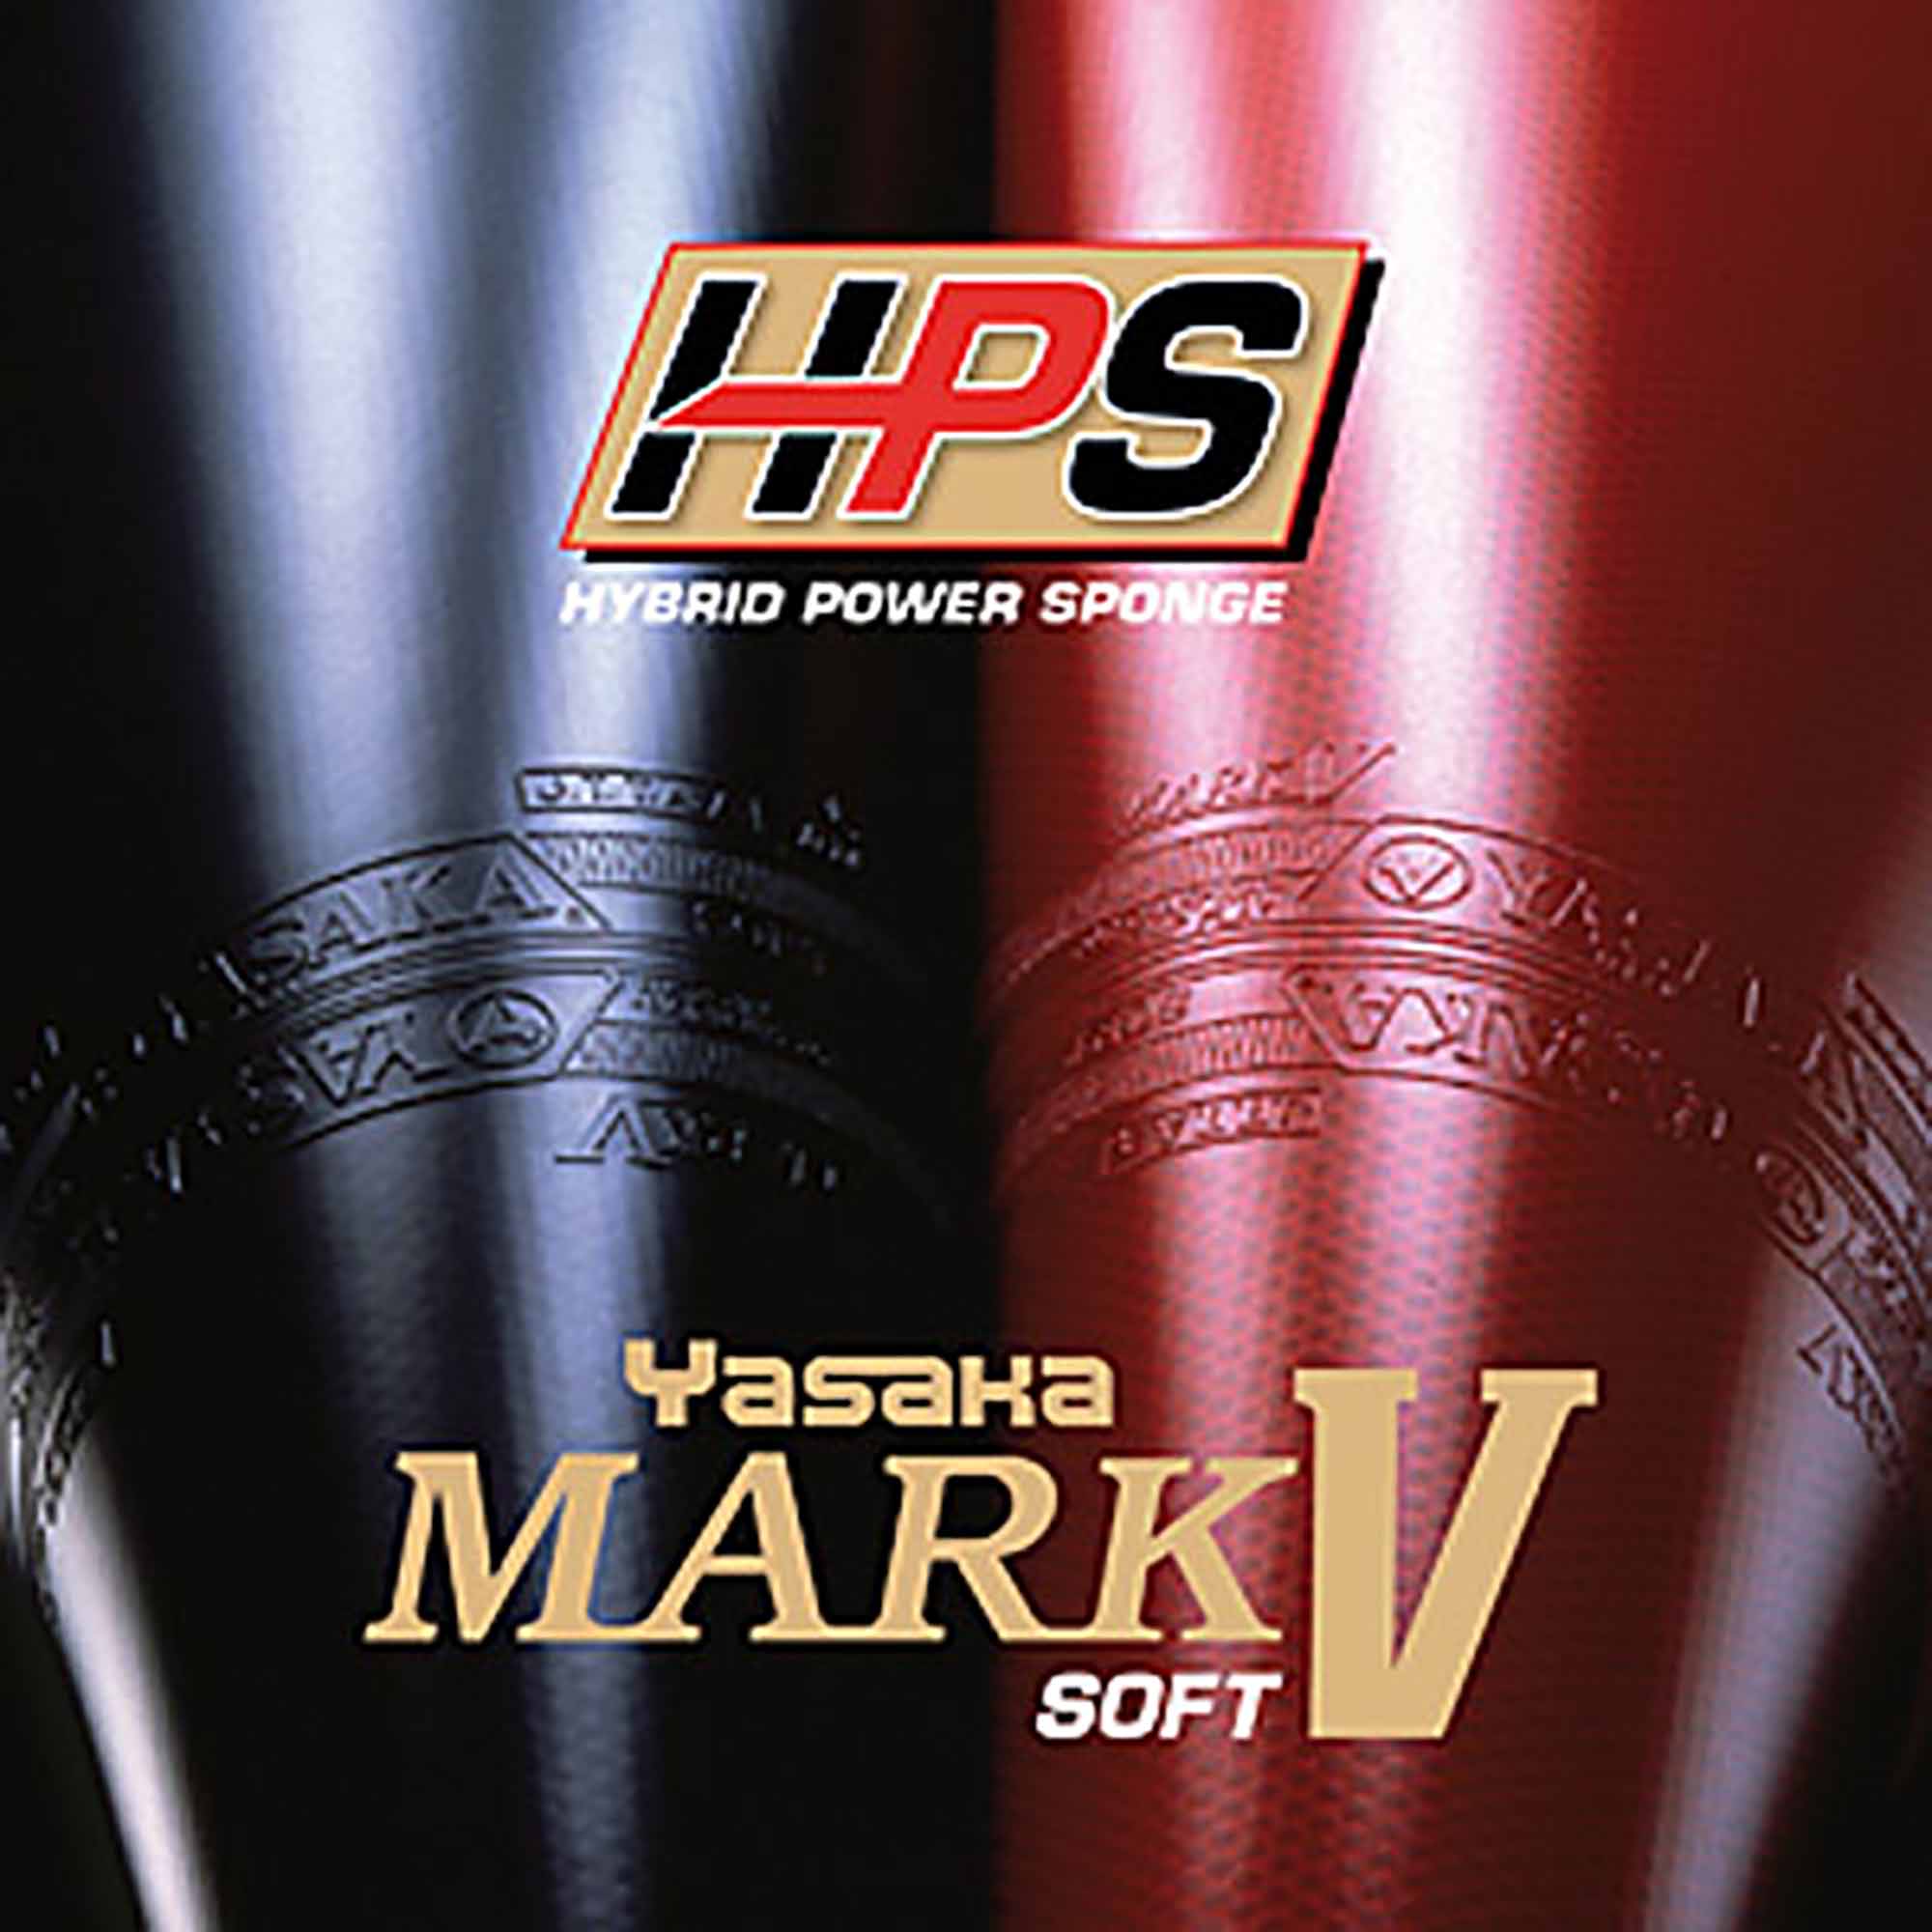 Yasaka Belag Mark V HPS soft